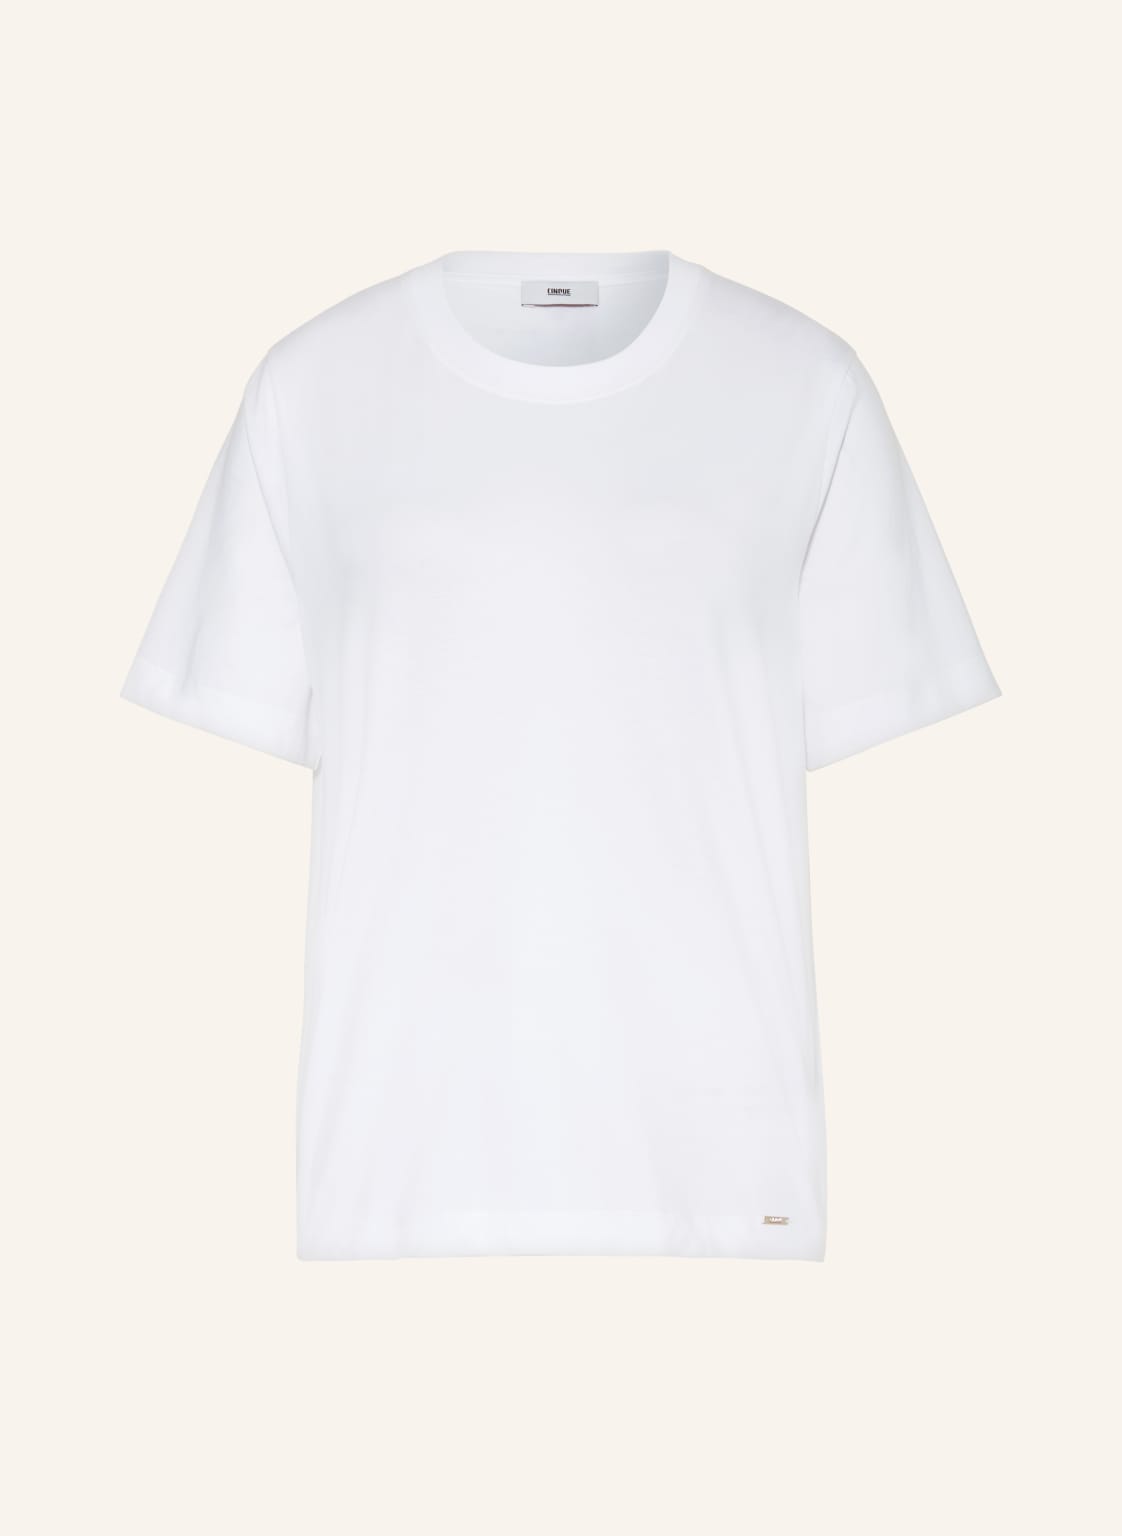 Cinque T-Shirt Citana weiss von CINQUE